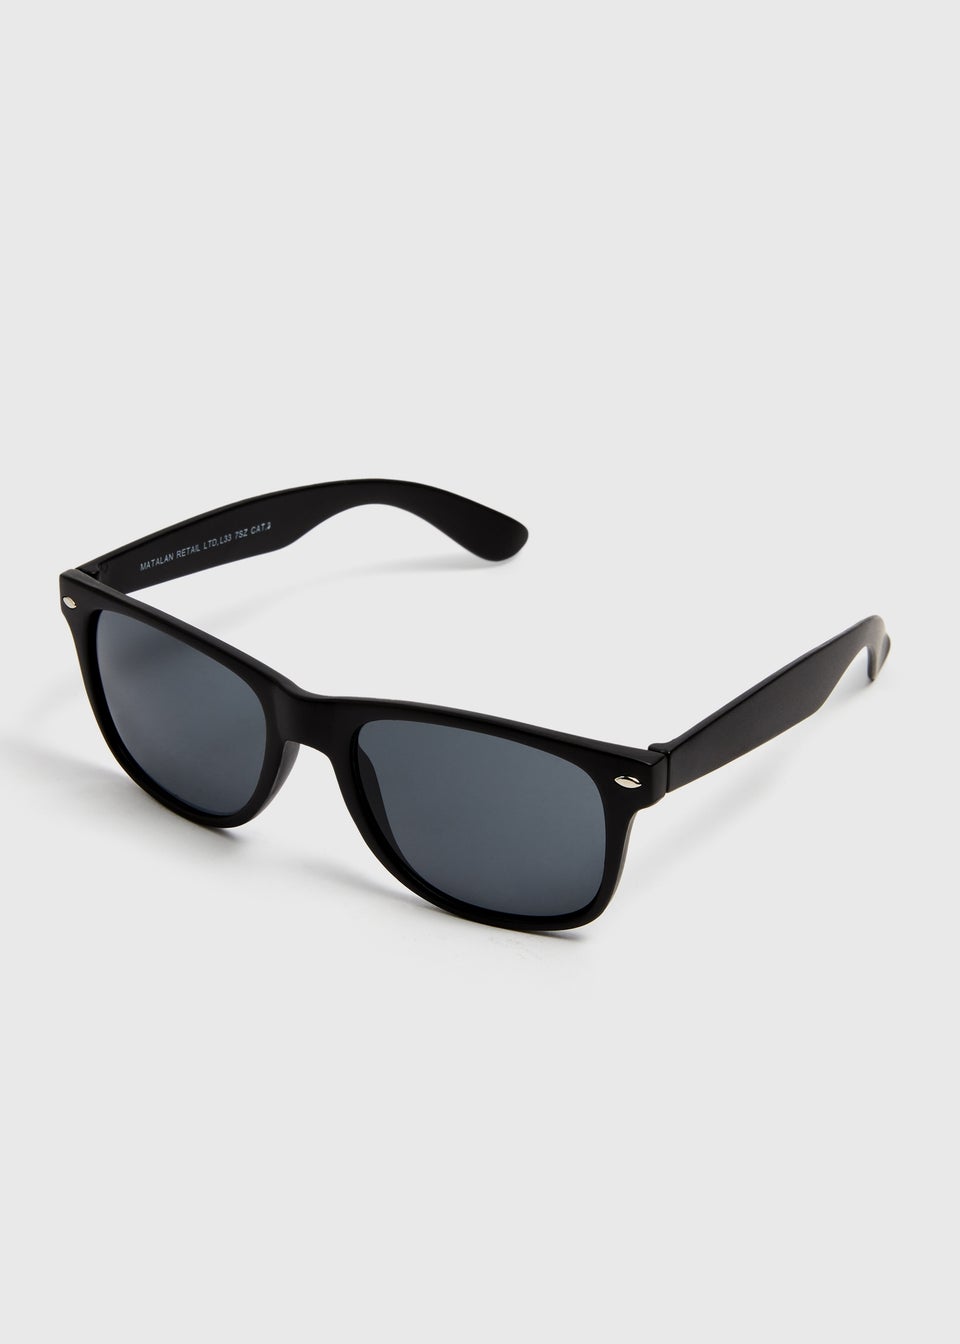 Men's Sunglasses - Aviator, Wayfarer, Navigator & Sports - Matalan